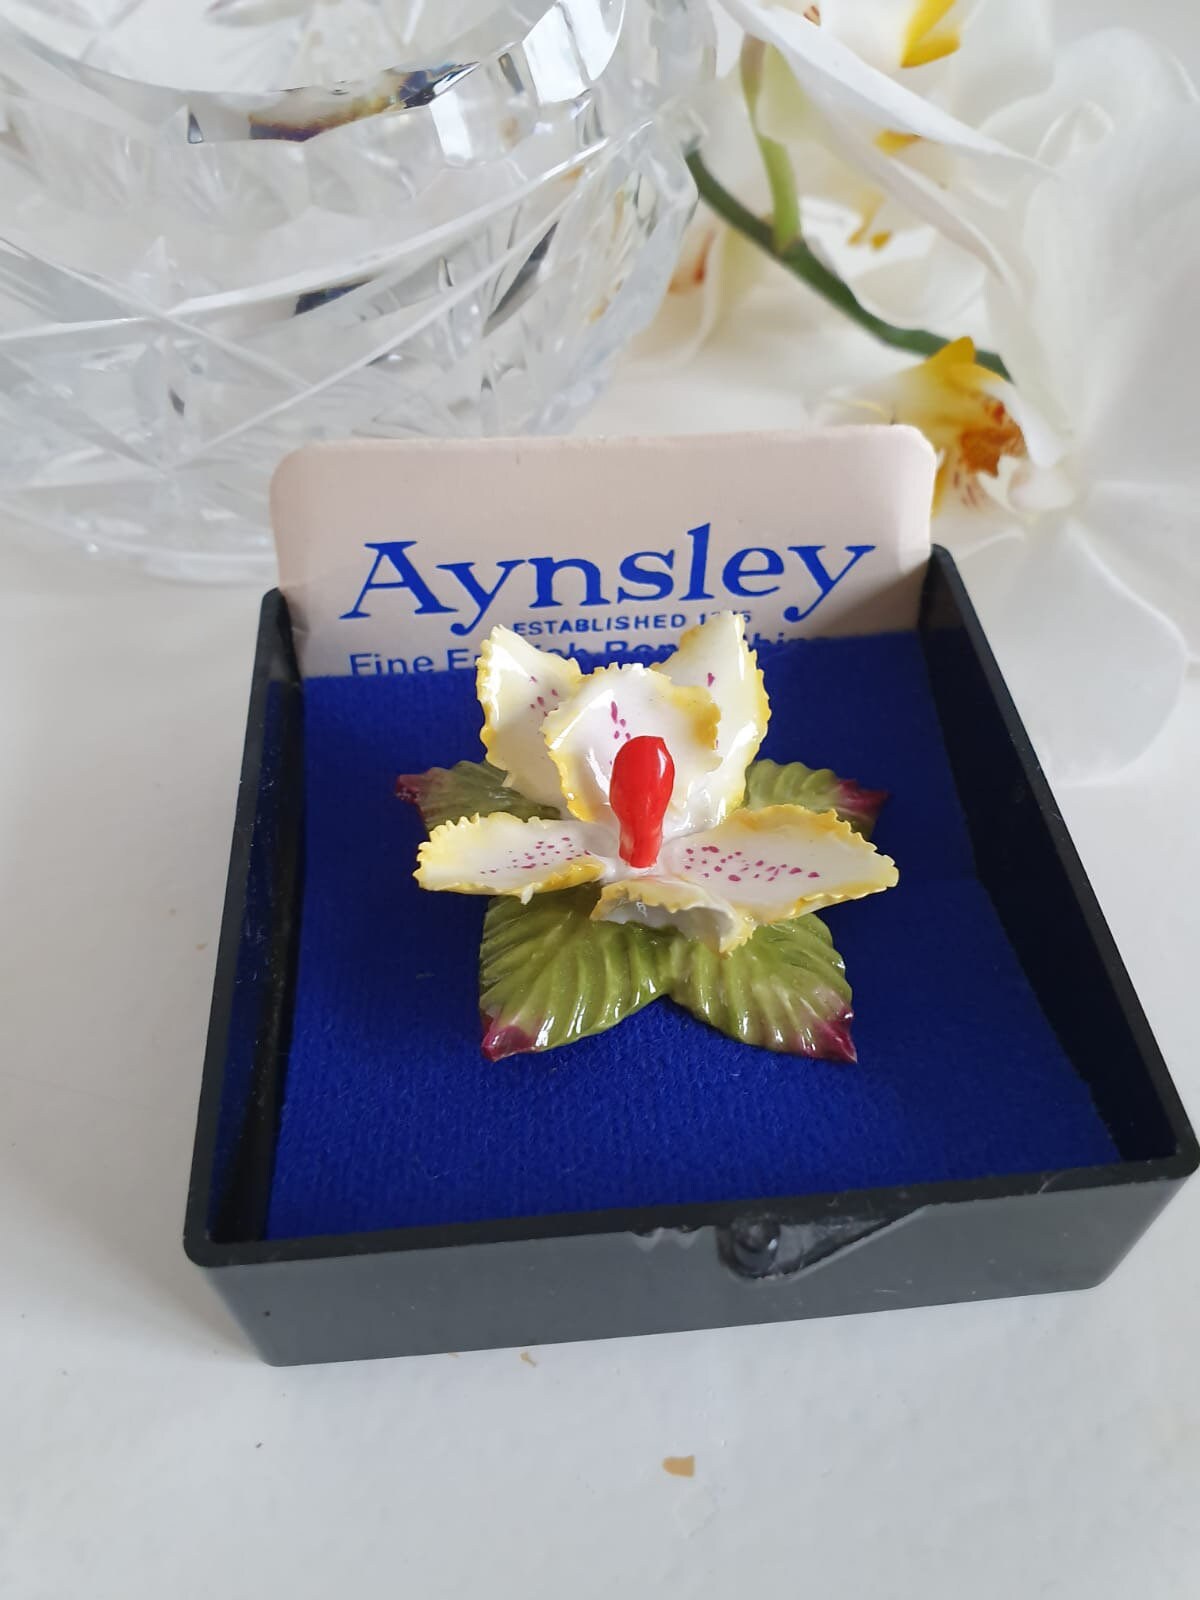 Flower Brooch in Gift Box